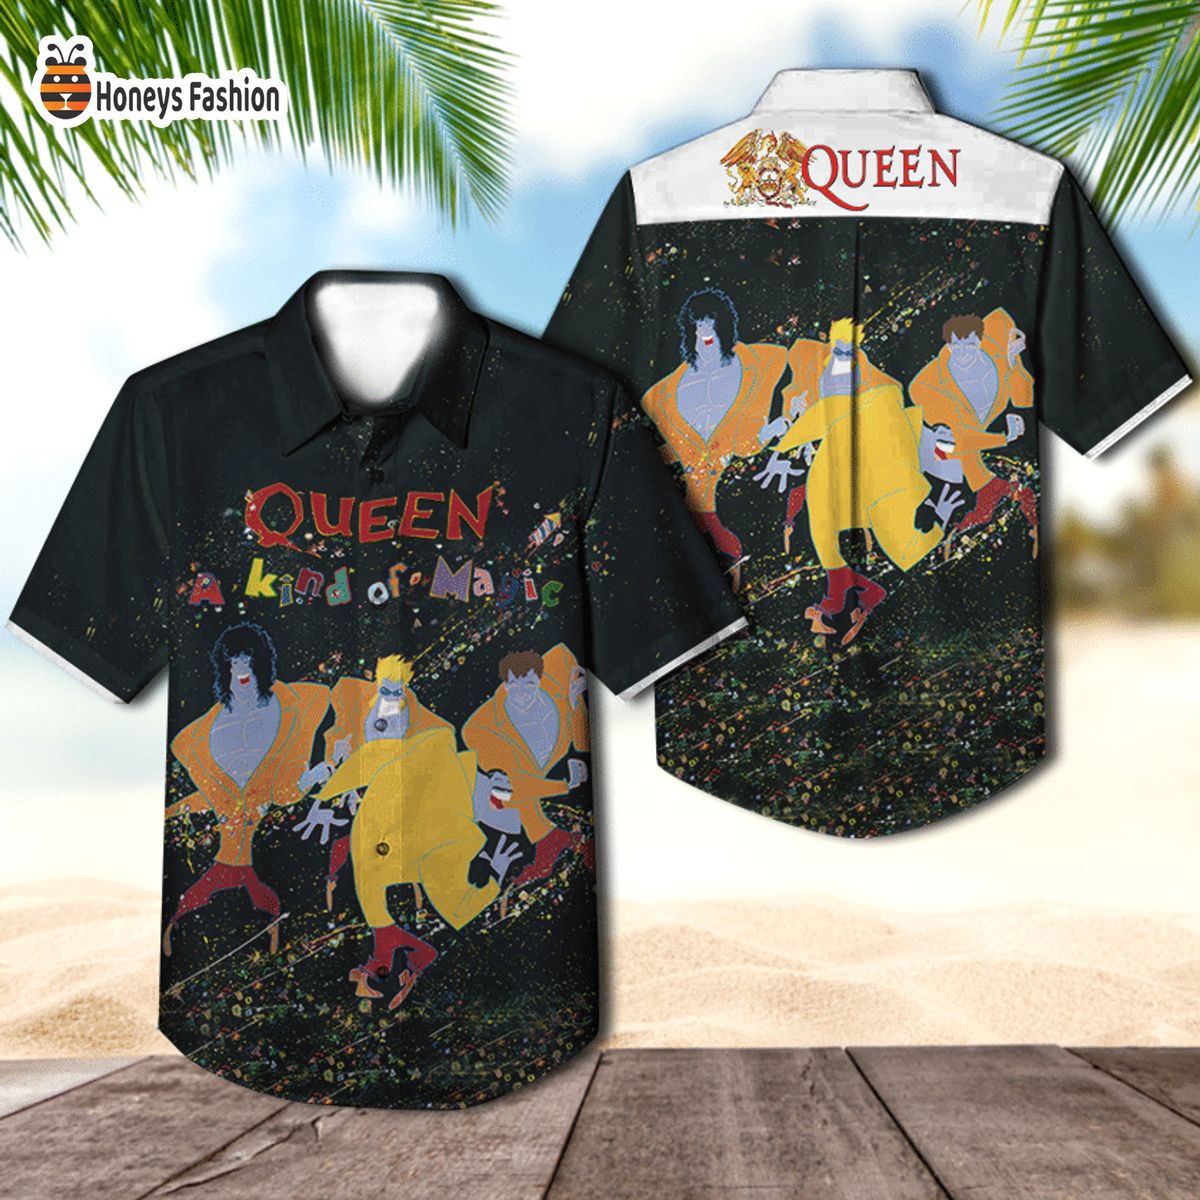 Queen band a kind of magic album cover hawaiian shirt